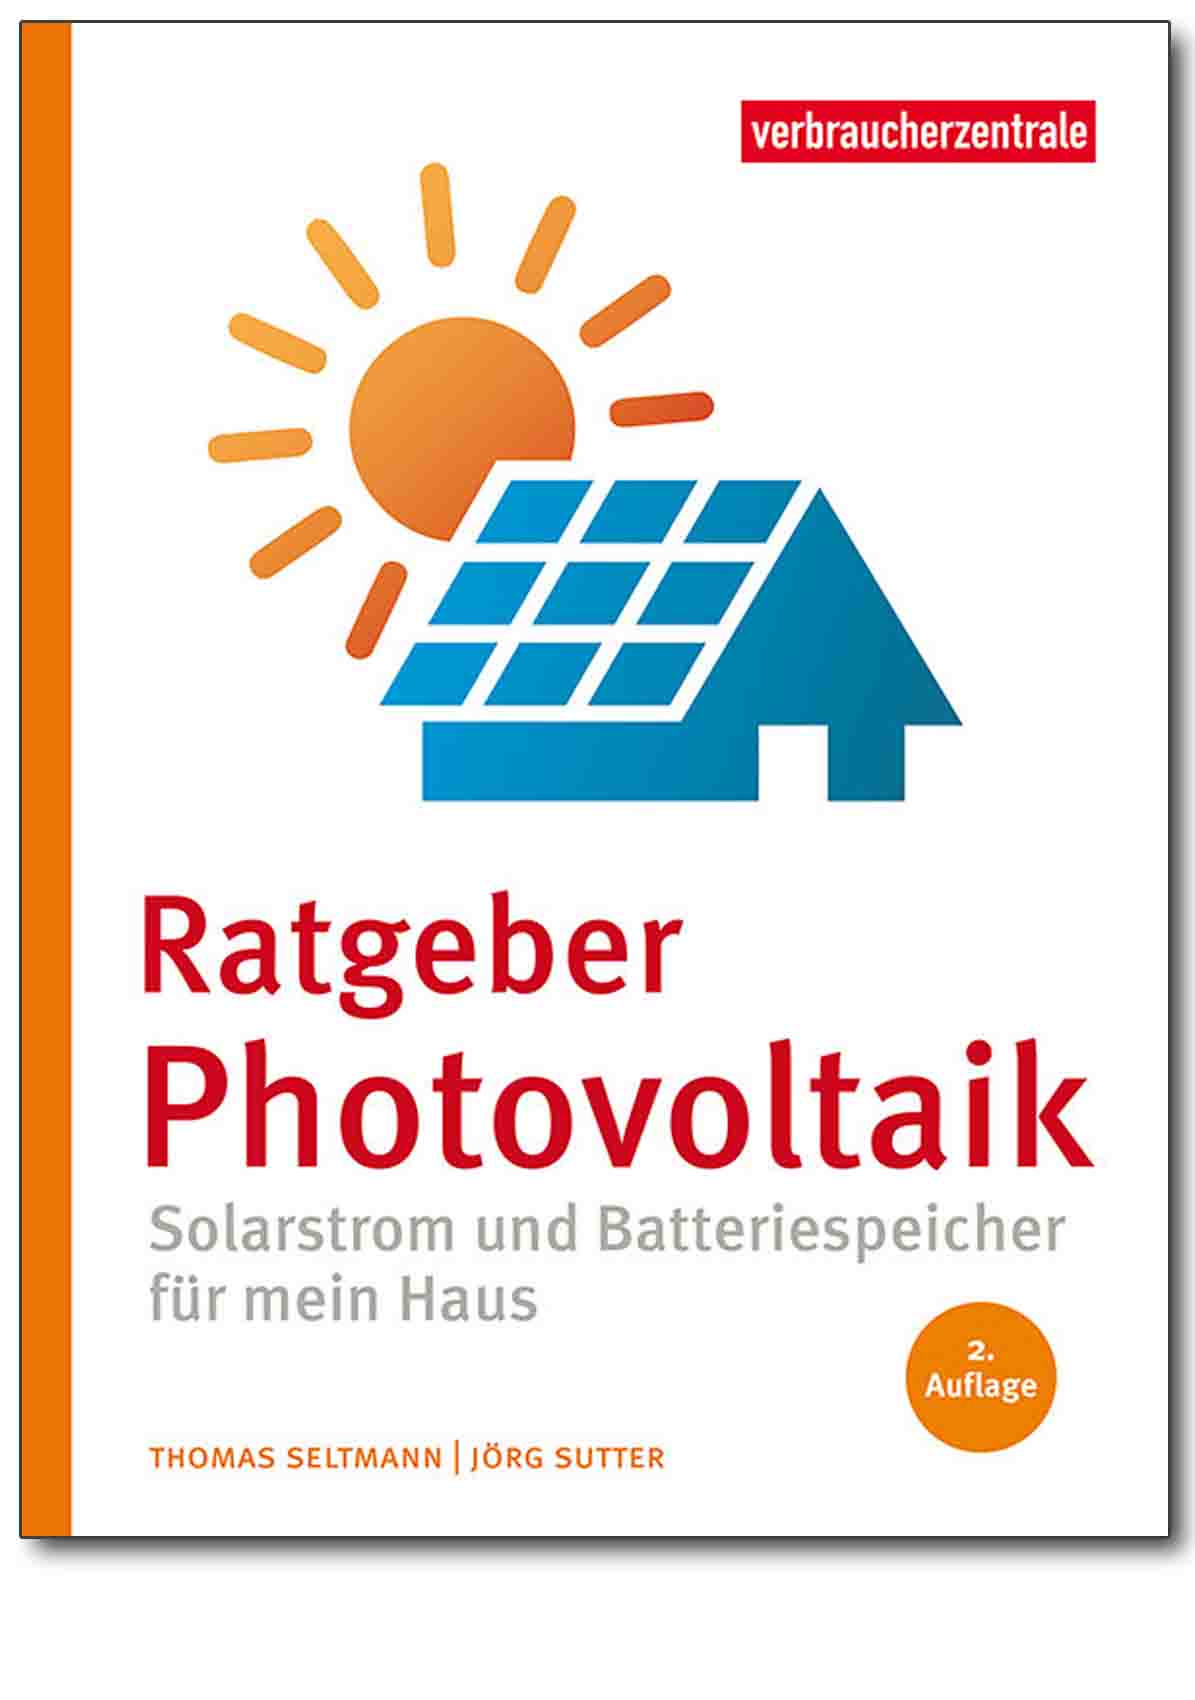 Buch - Ratgeber Photovoltaik - Verbraucherzentrale